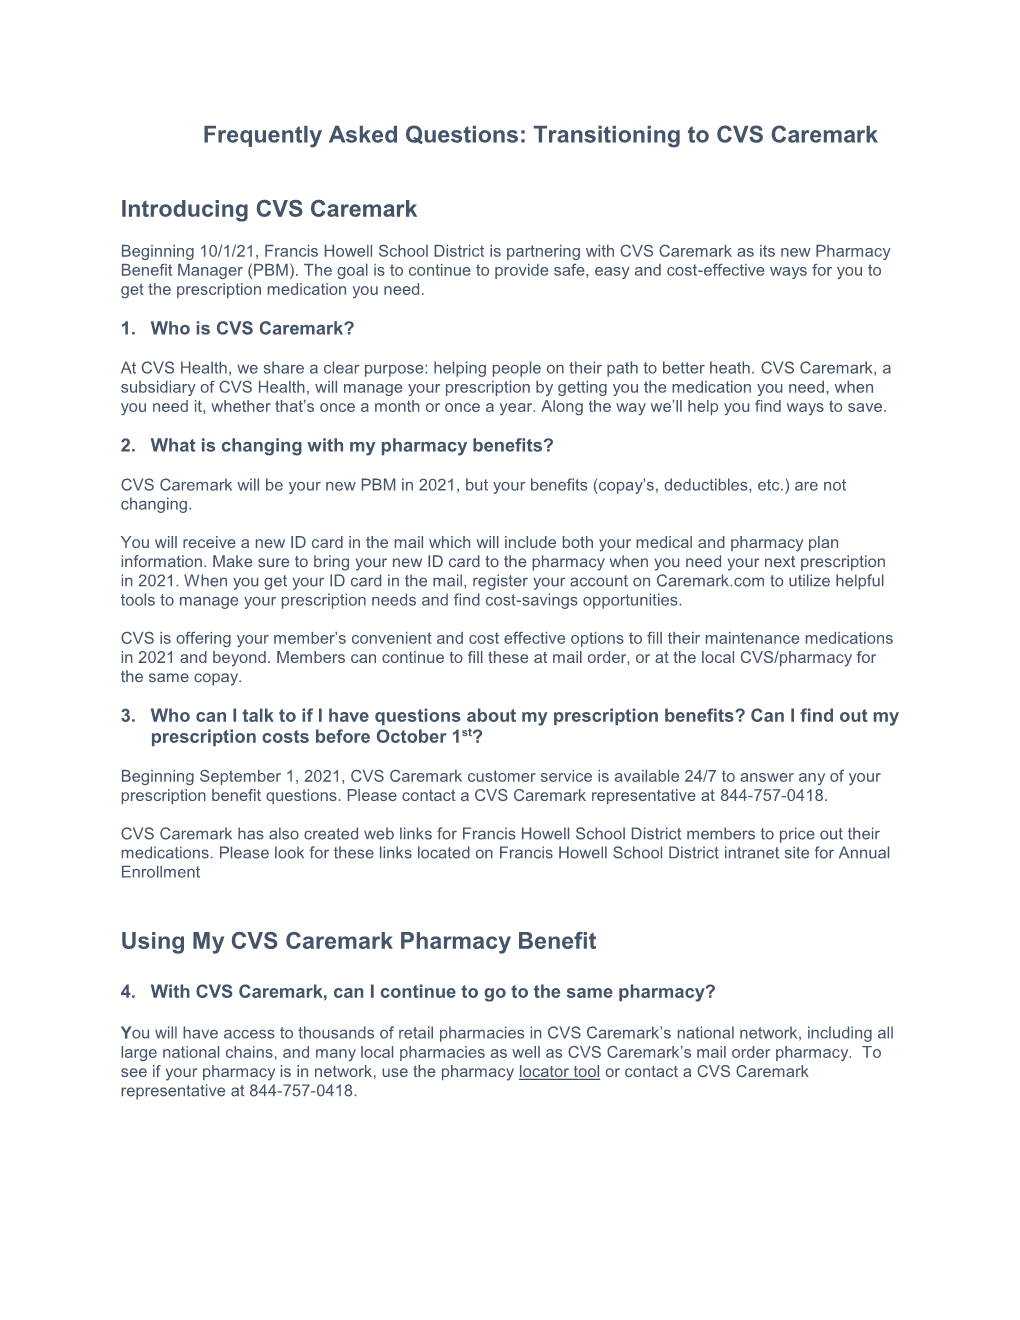 CVS Caremark FAQ Sheet